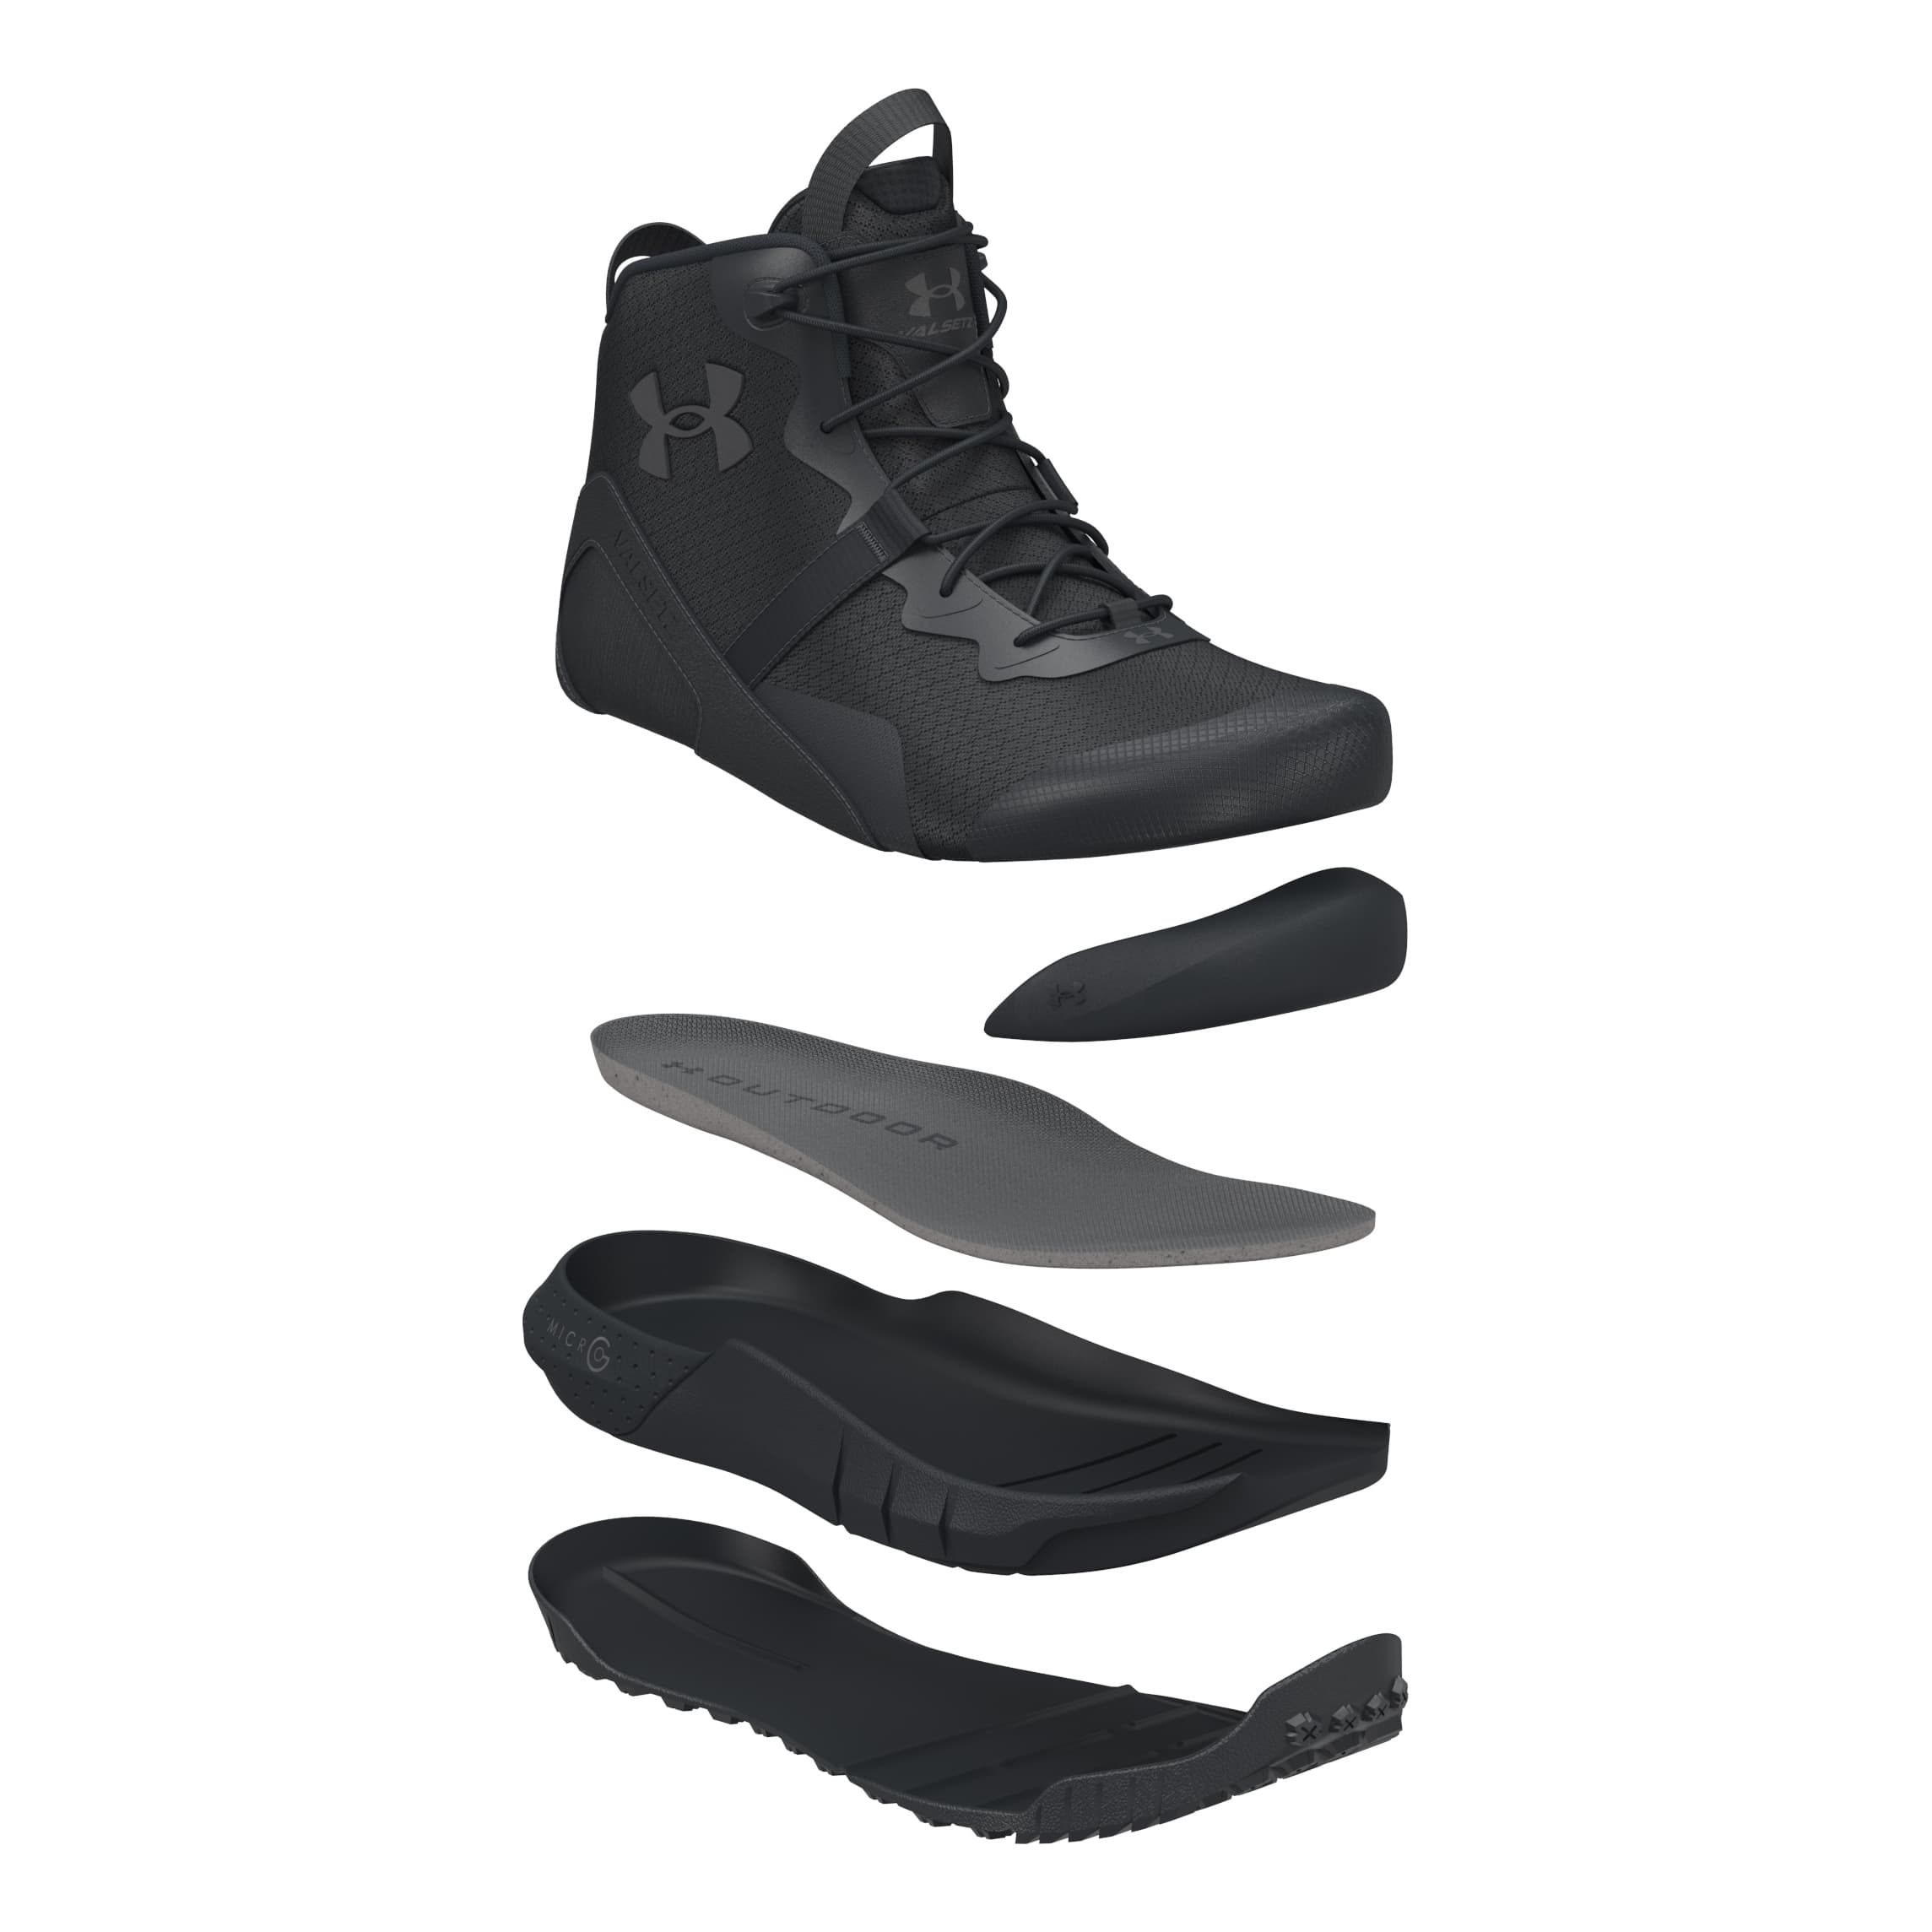 Under Armour - Micro G Valsetz Zip Mid Ankle boots